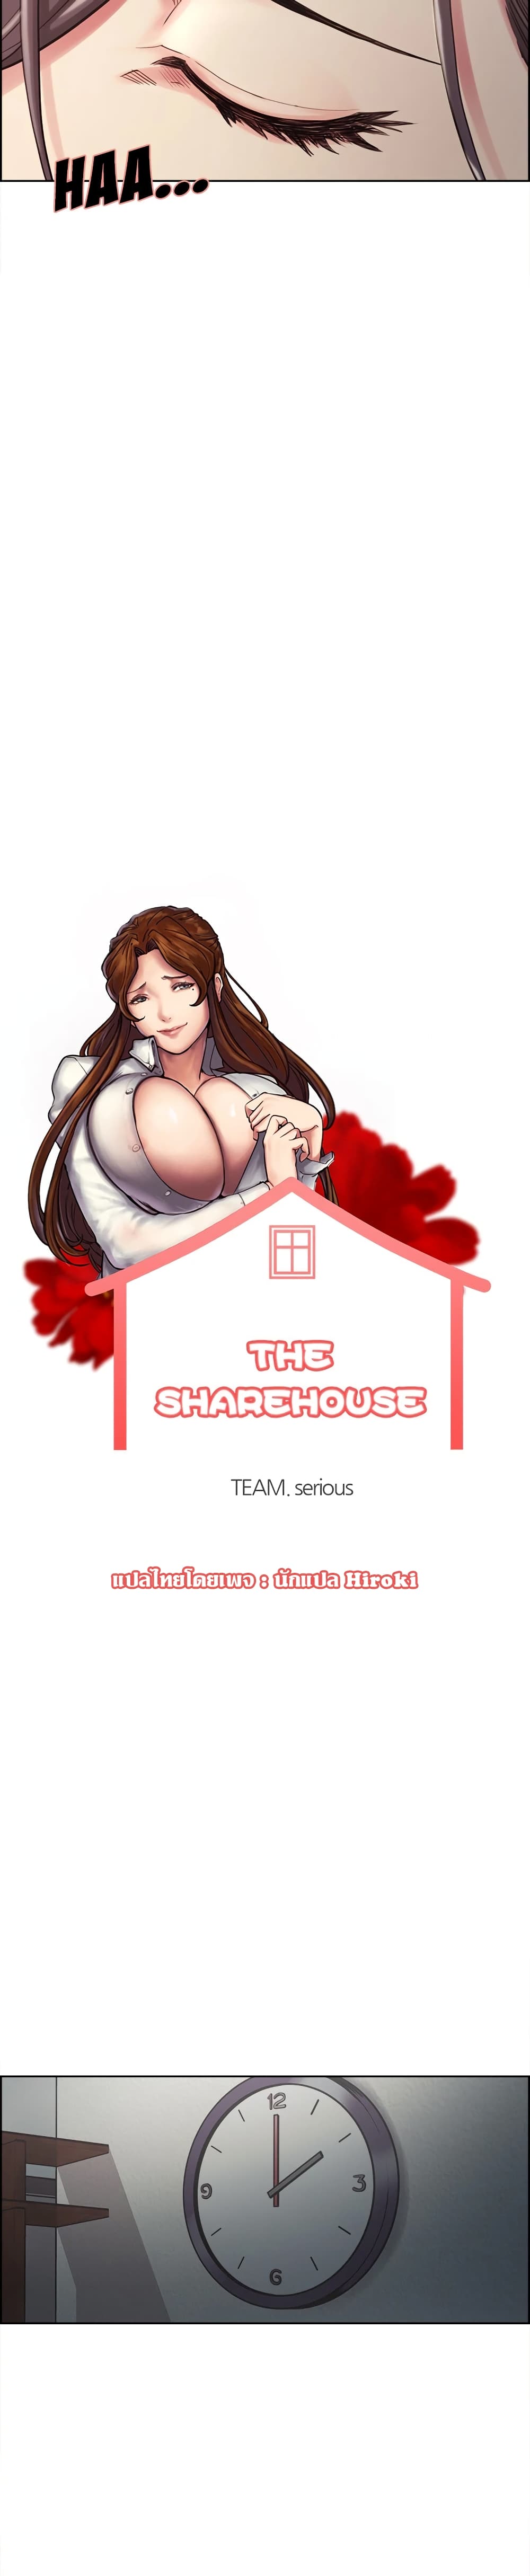 The Sharehouse 41 05